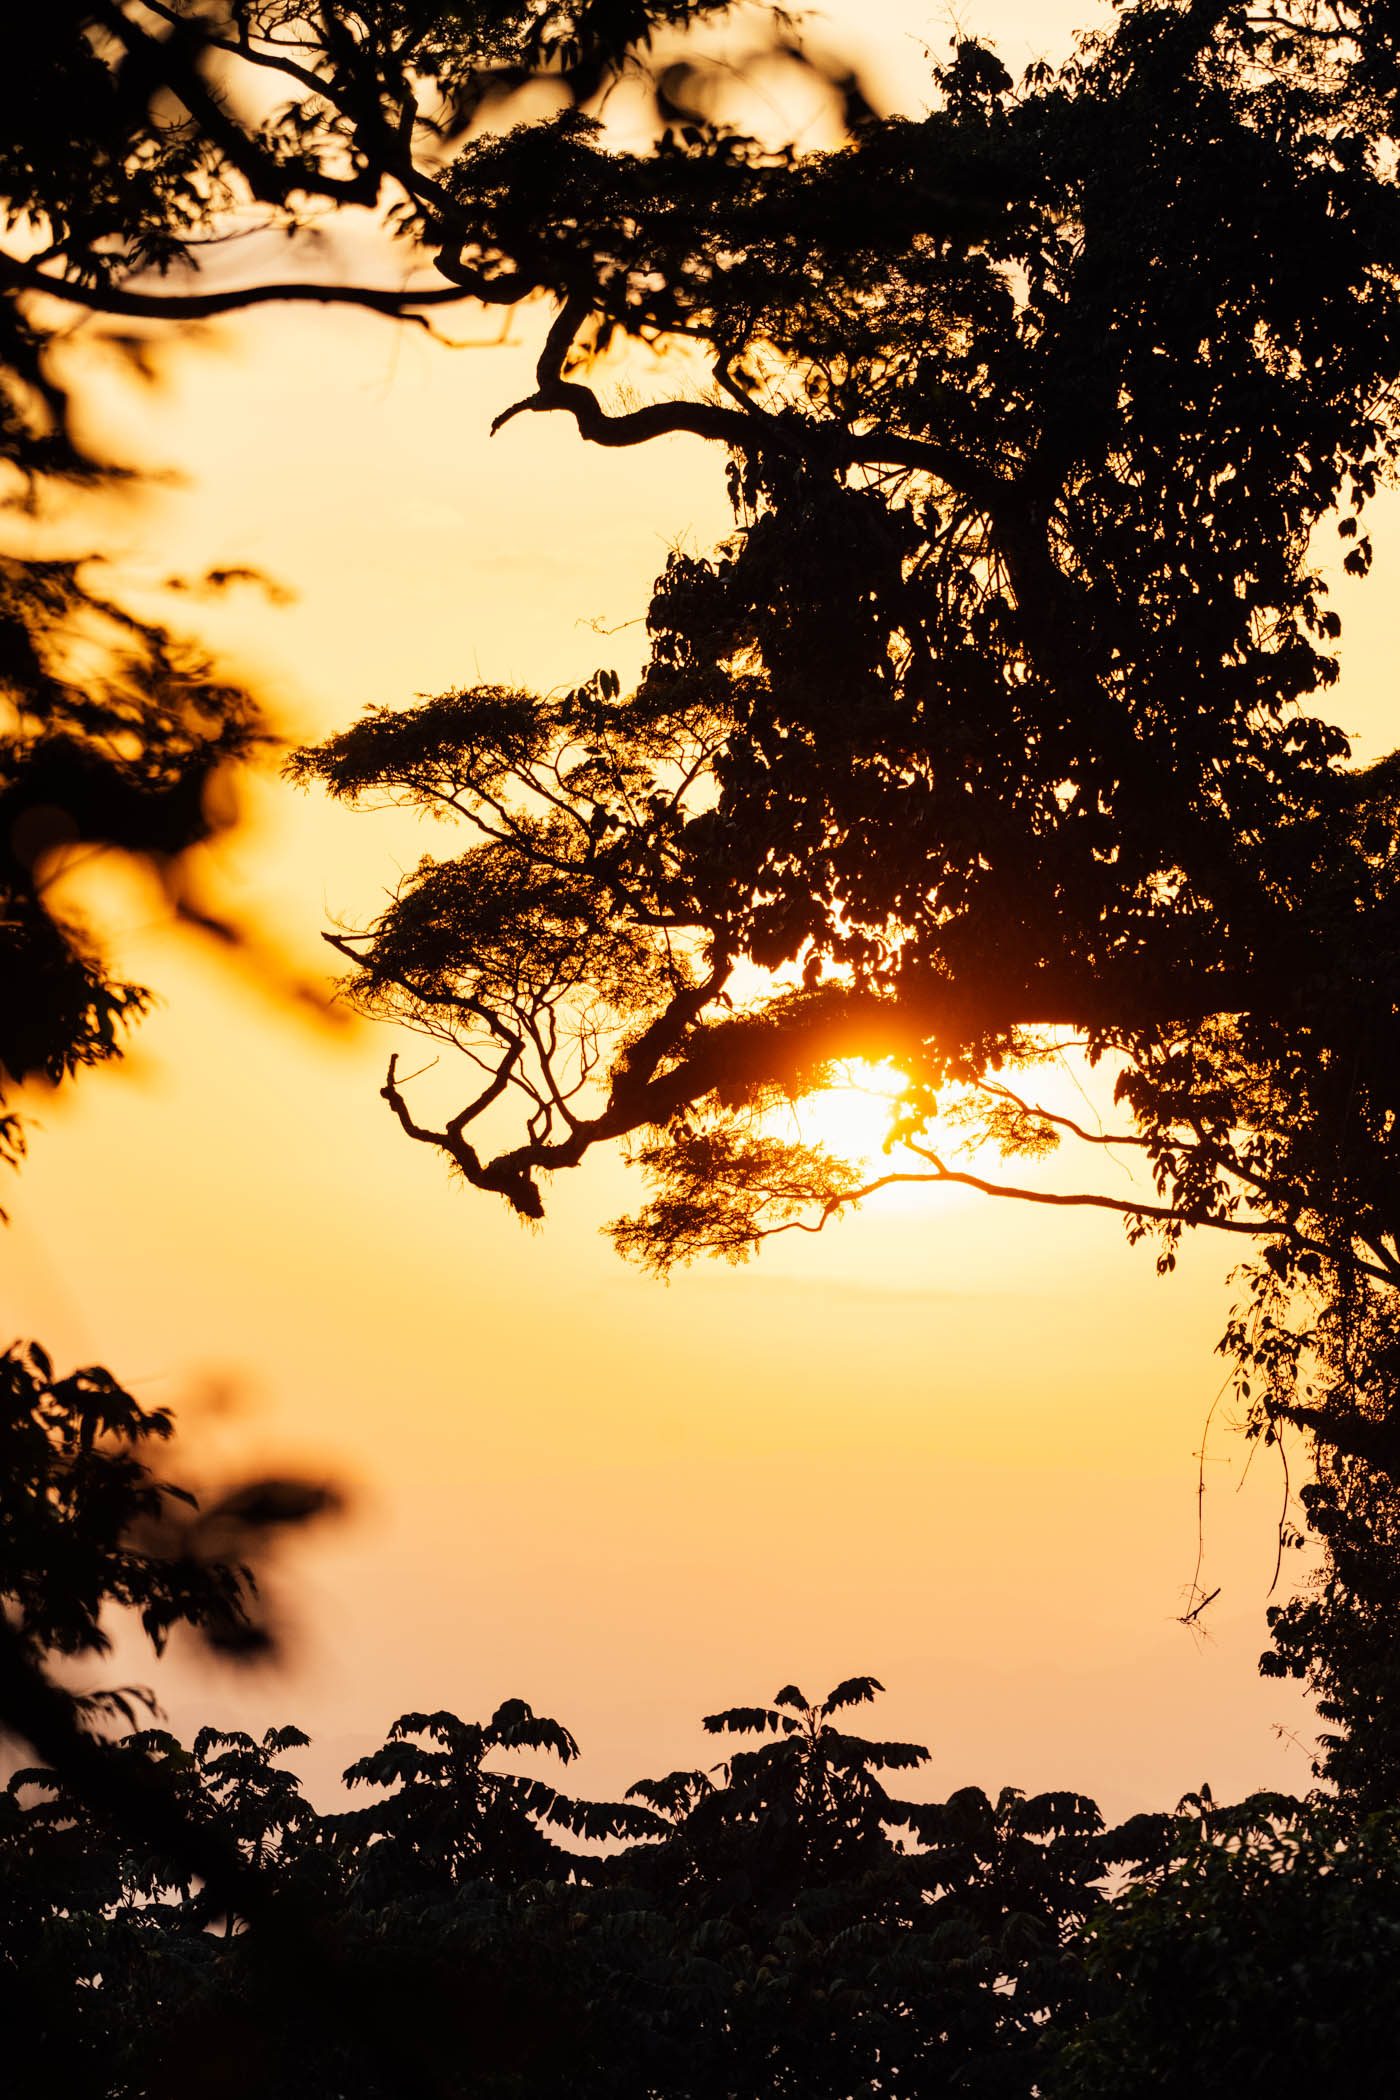 Sunrise in Nyungwe National Park in Rwanda